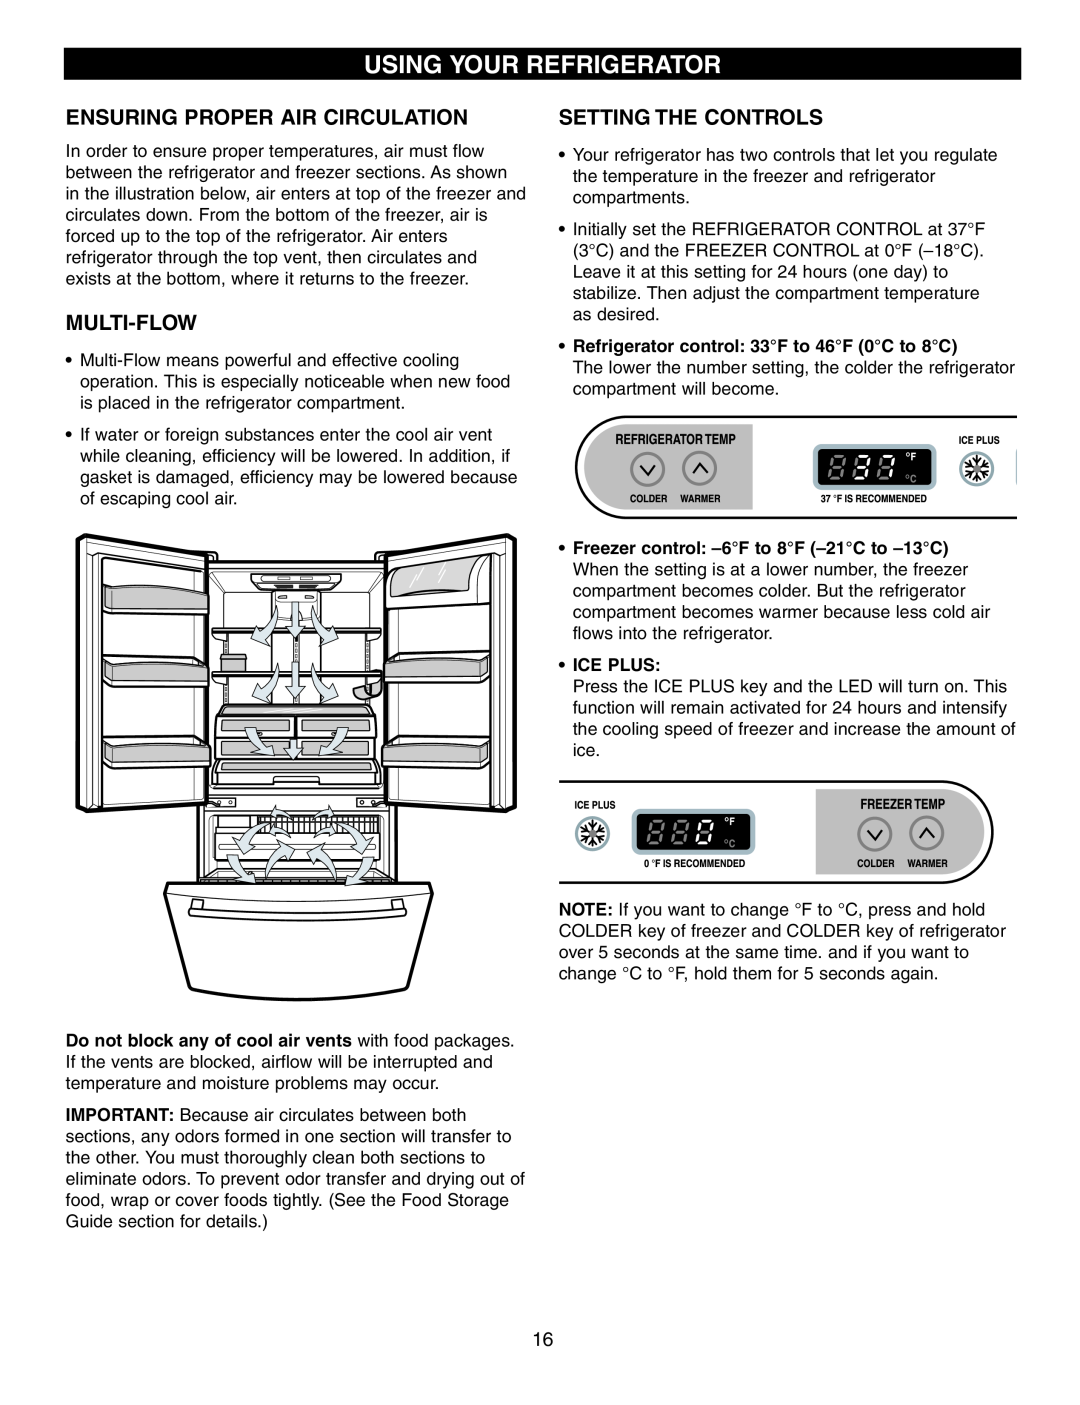 LG Electronics LFC25760 manual Using Your Refrigerator, Ensuring Proper Air Circulation, Multi-Flow, Setting The Controls 